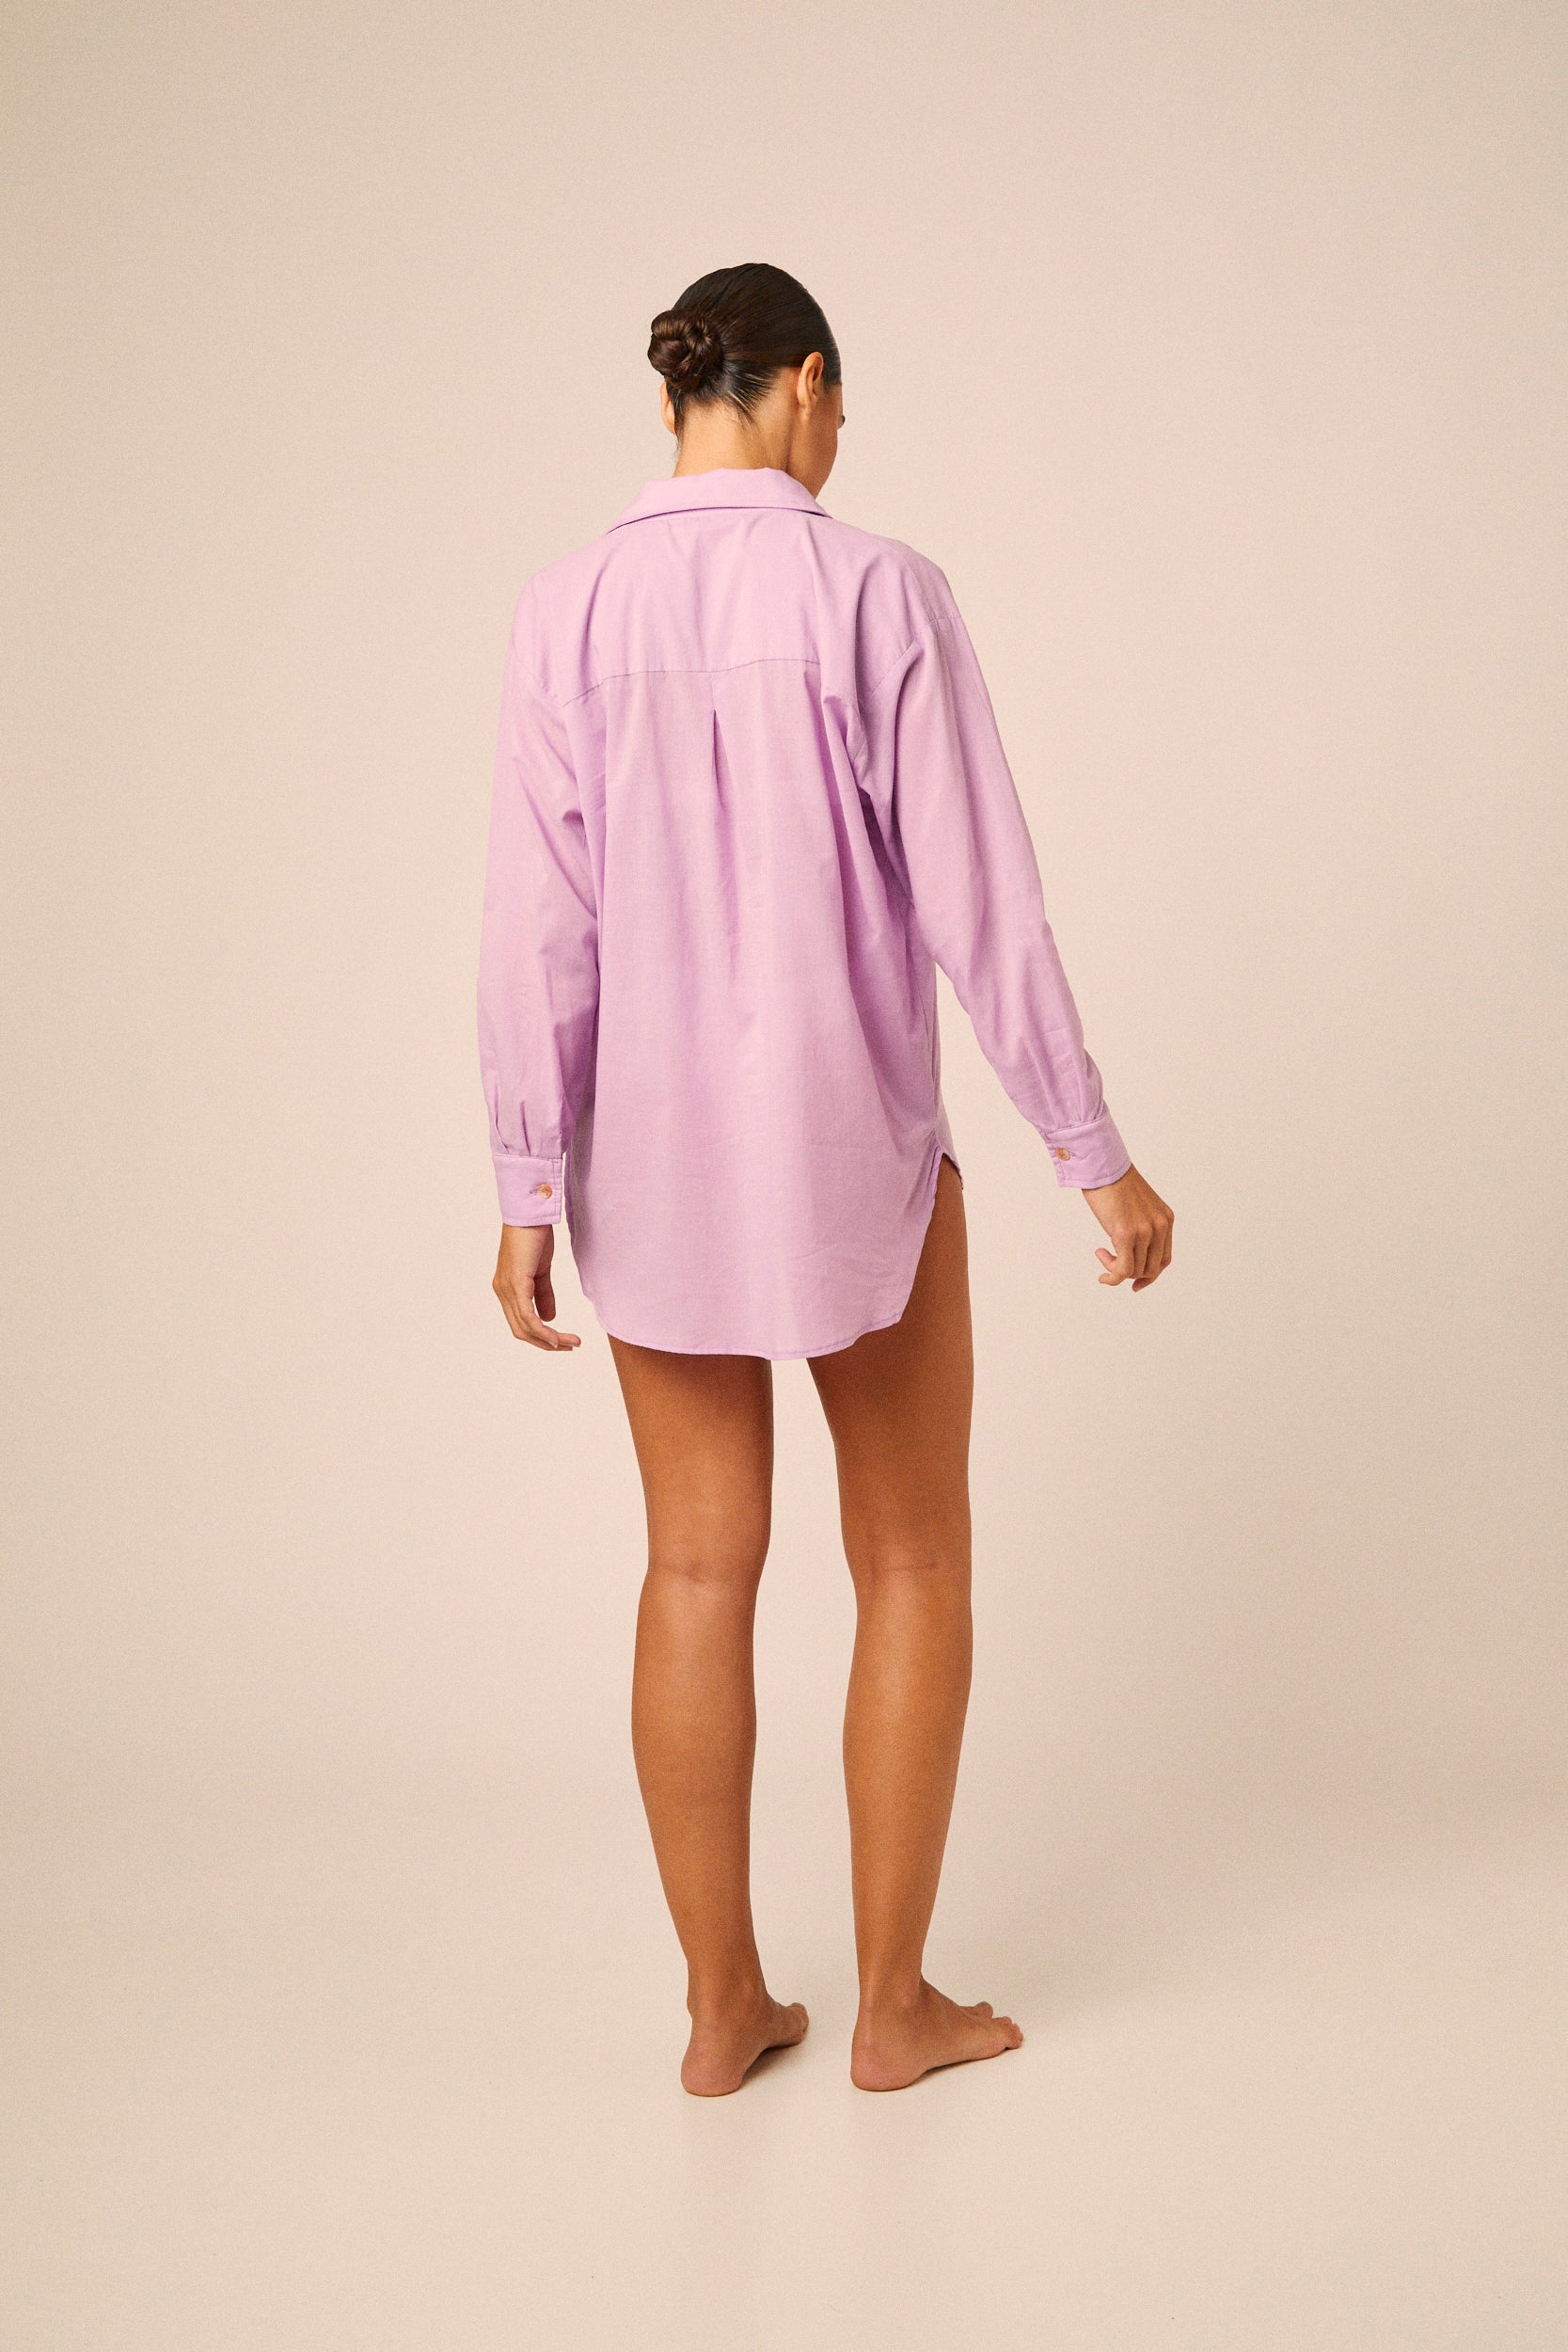 Camisa lilac